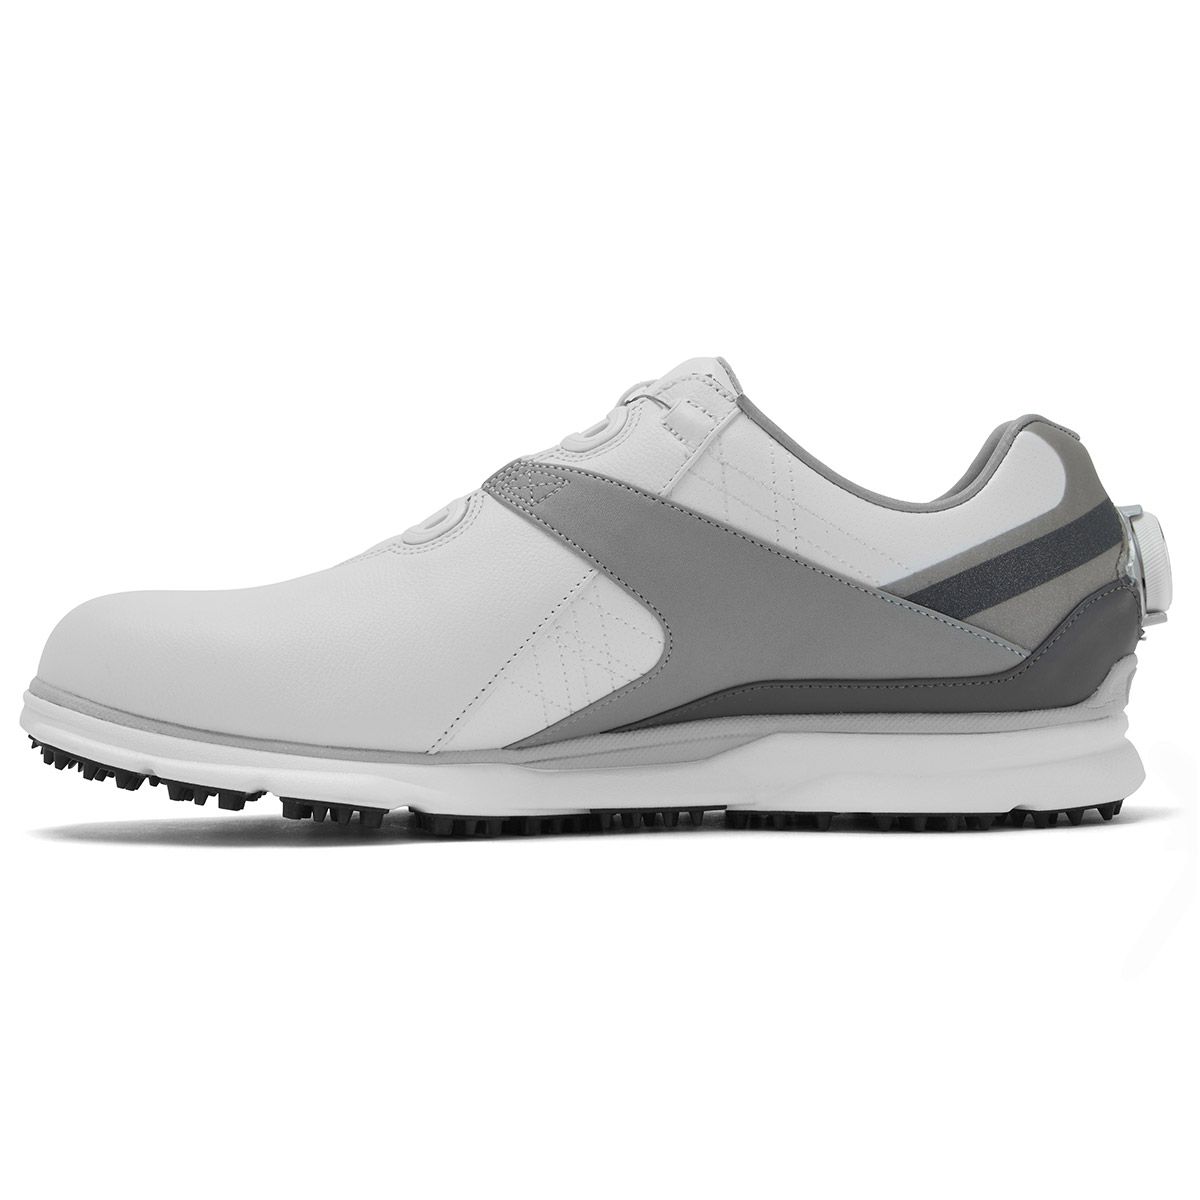 FootJoy Pro SL BOA Shoes 2020 | Online Golf